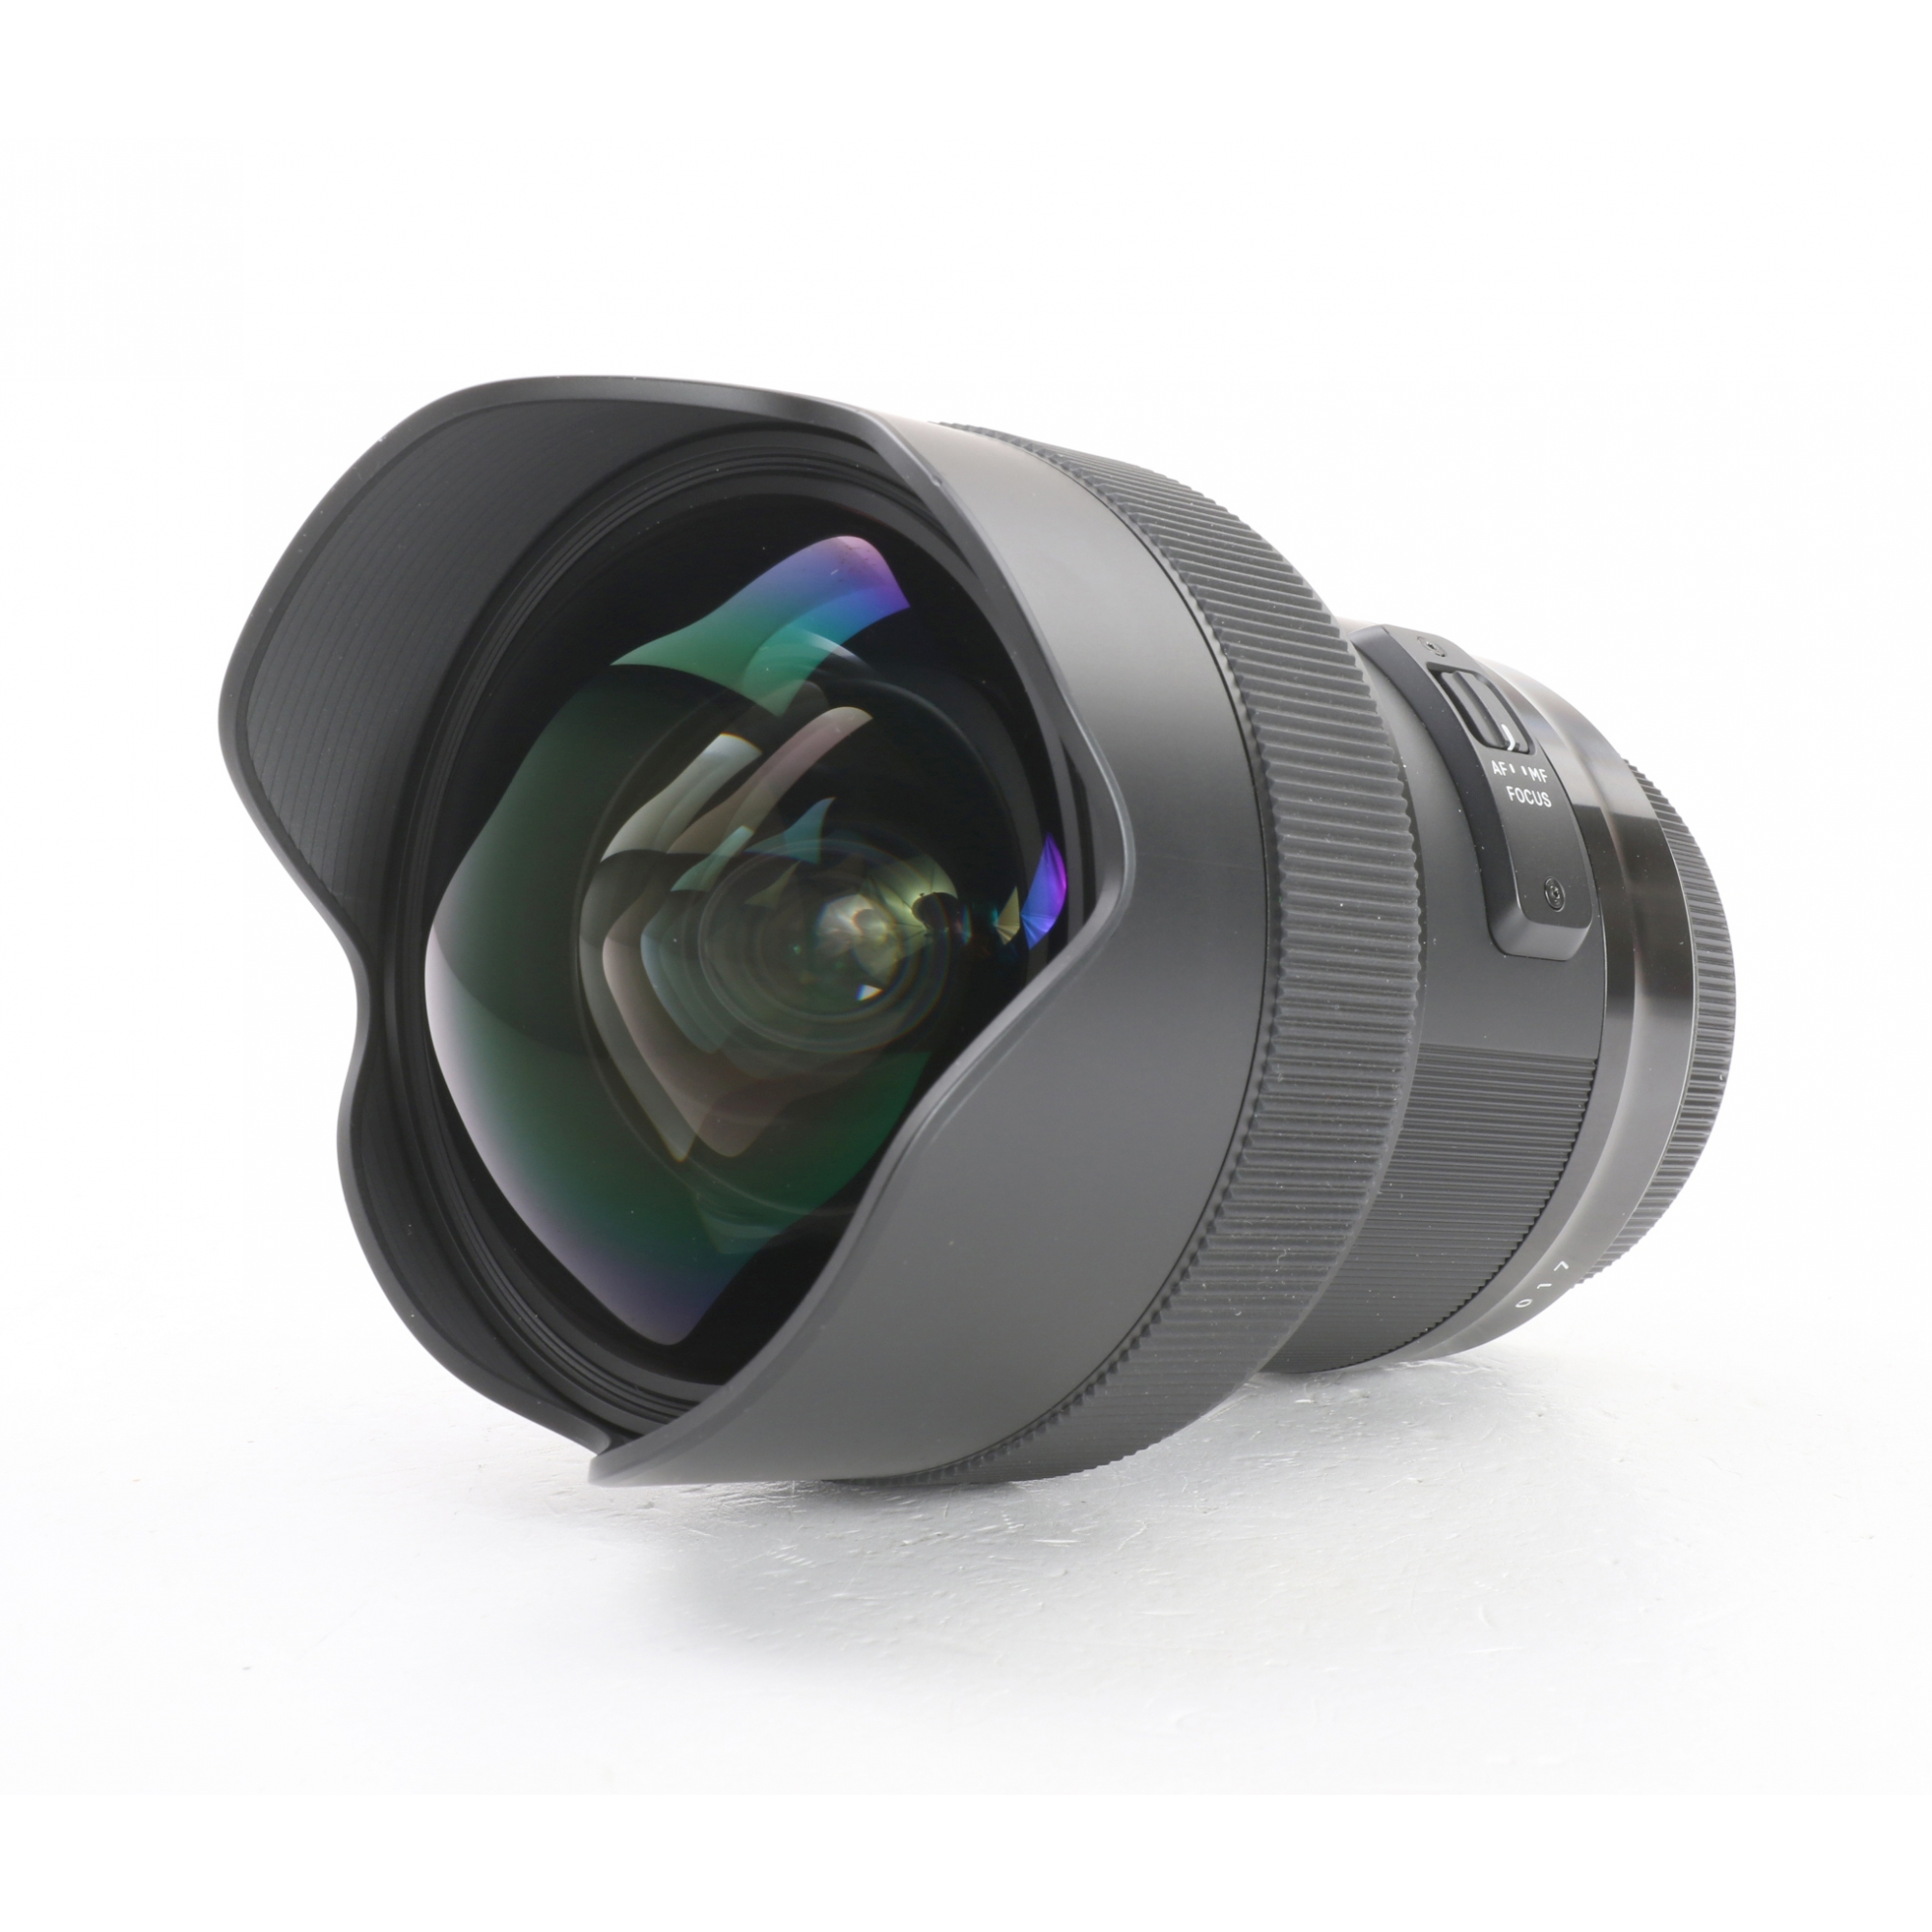 Sigma 14mm F1.8 DG HSM Art Lens for Canon for sale online | eBay